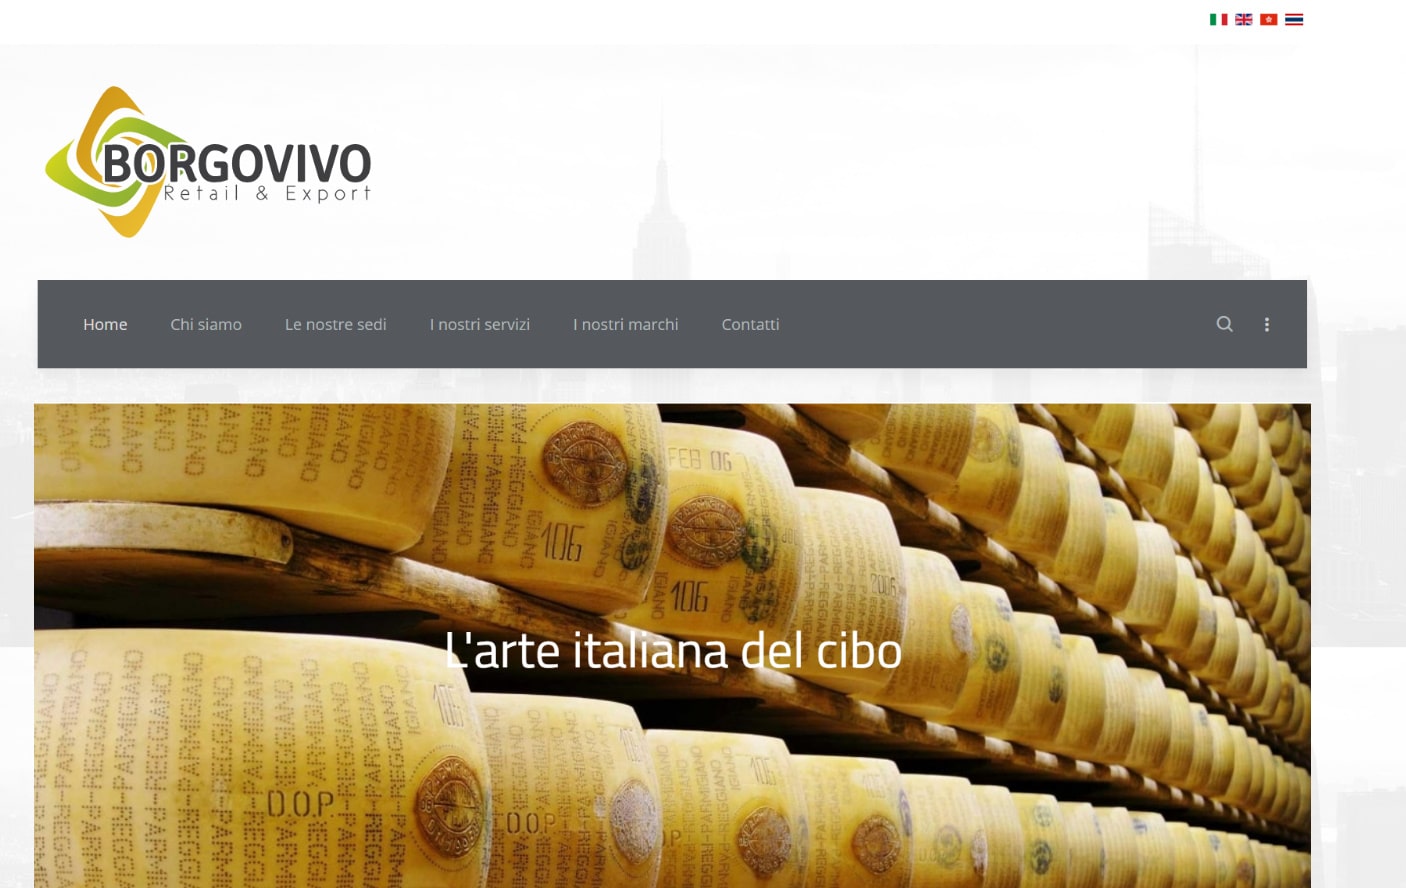 Borgovivo Retail & Export - Sito dinamico multilingue